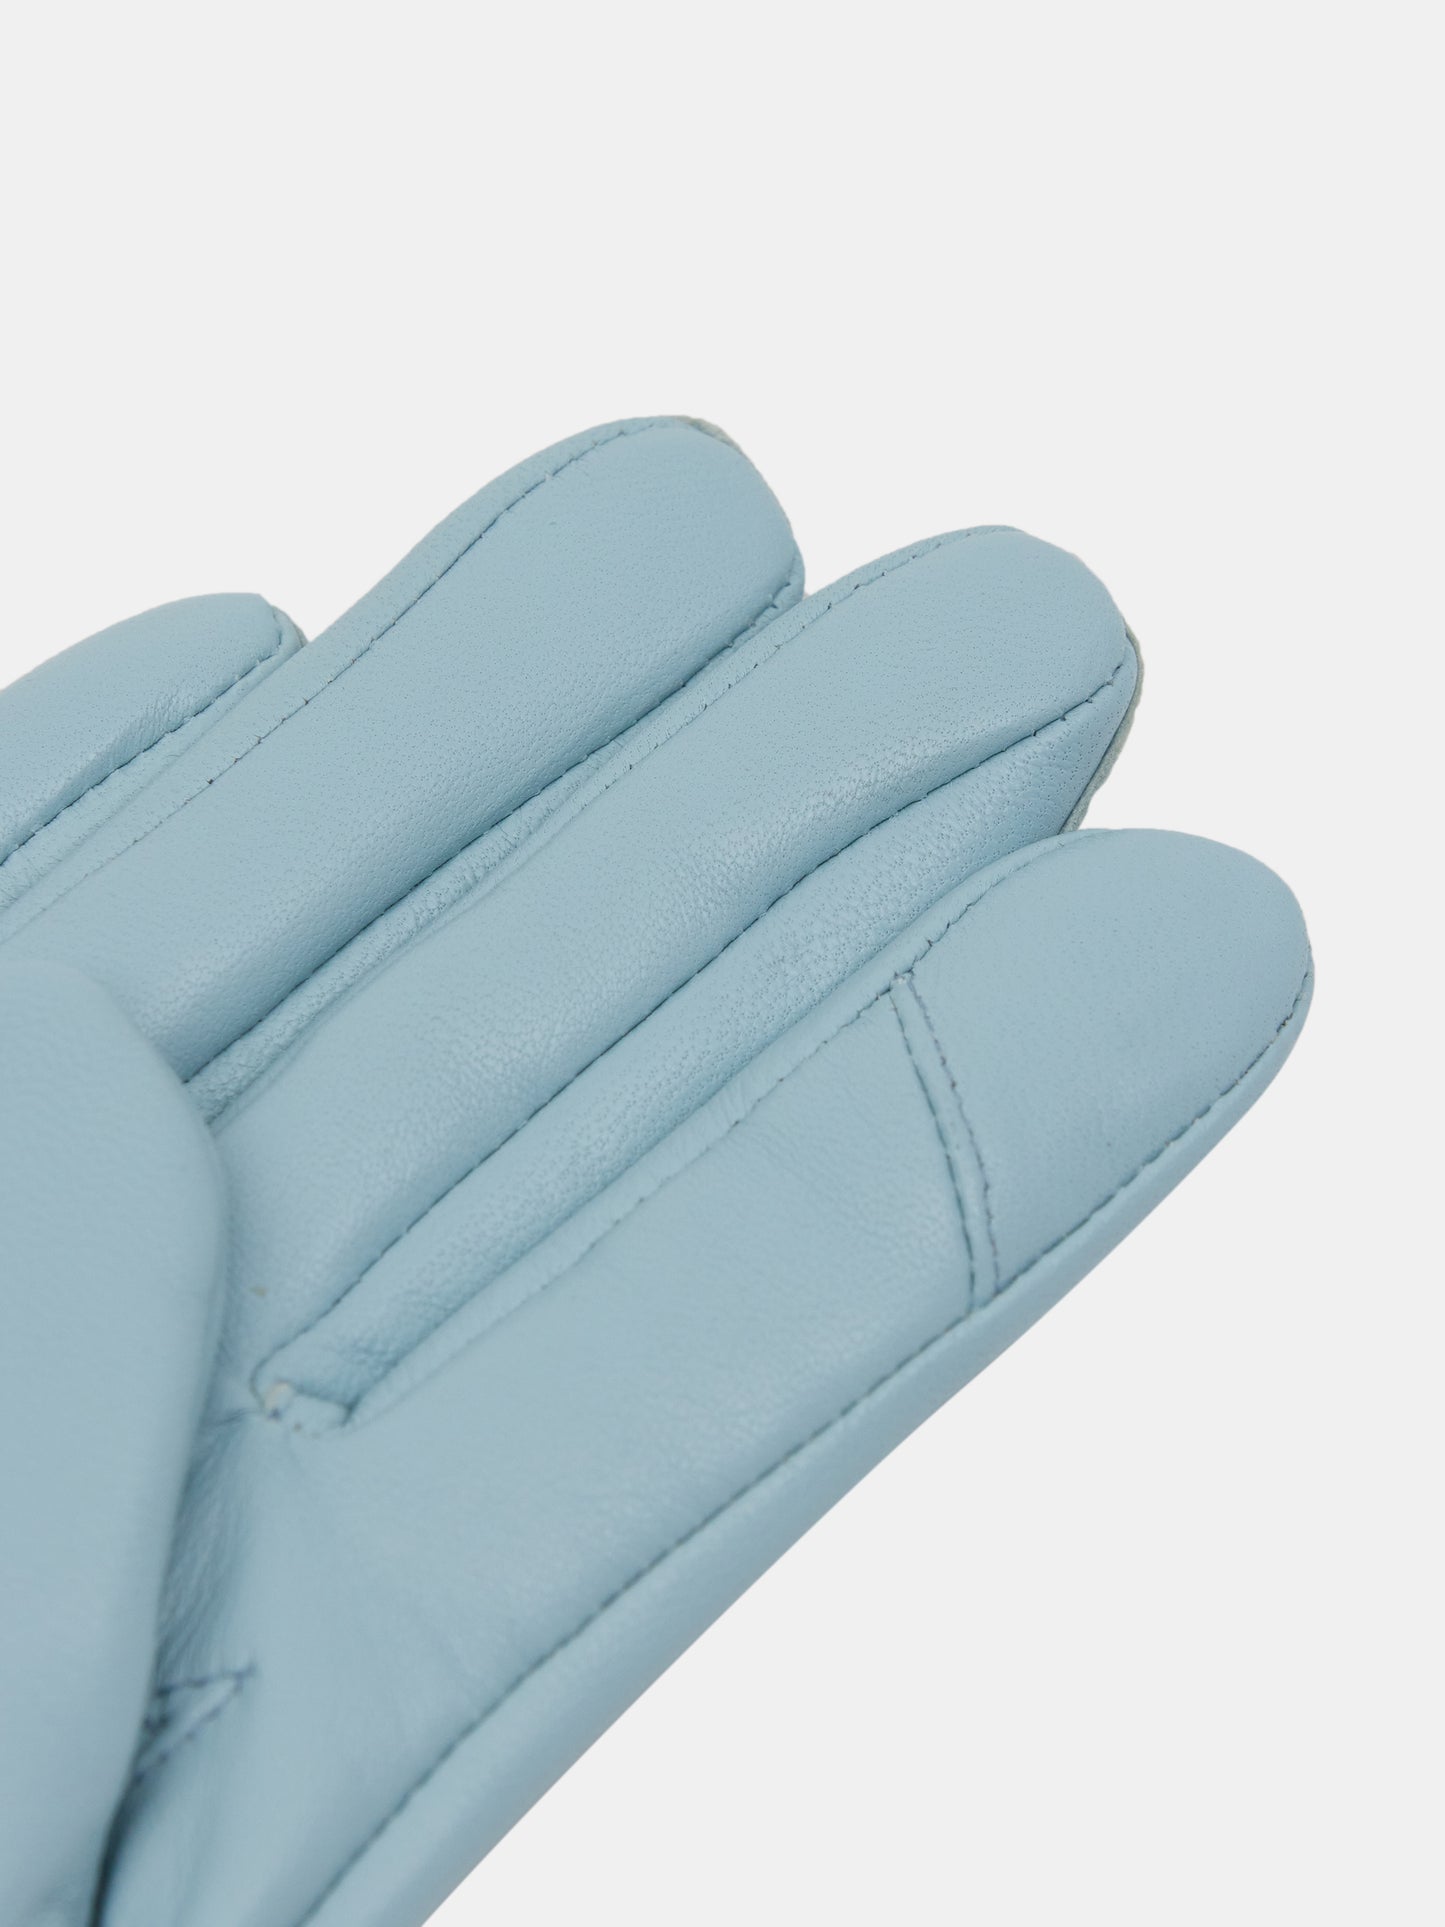 Lambskin Button Leather Gloves, Powder Blue